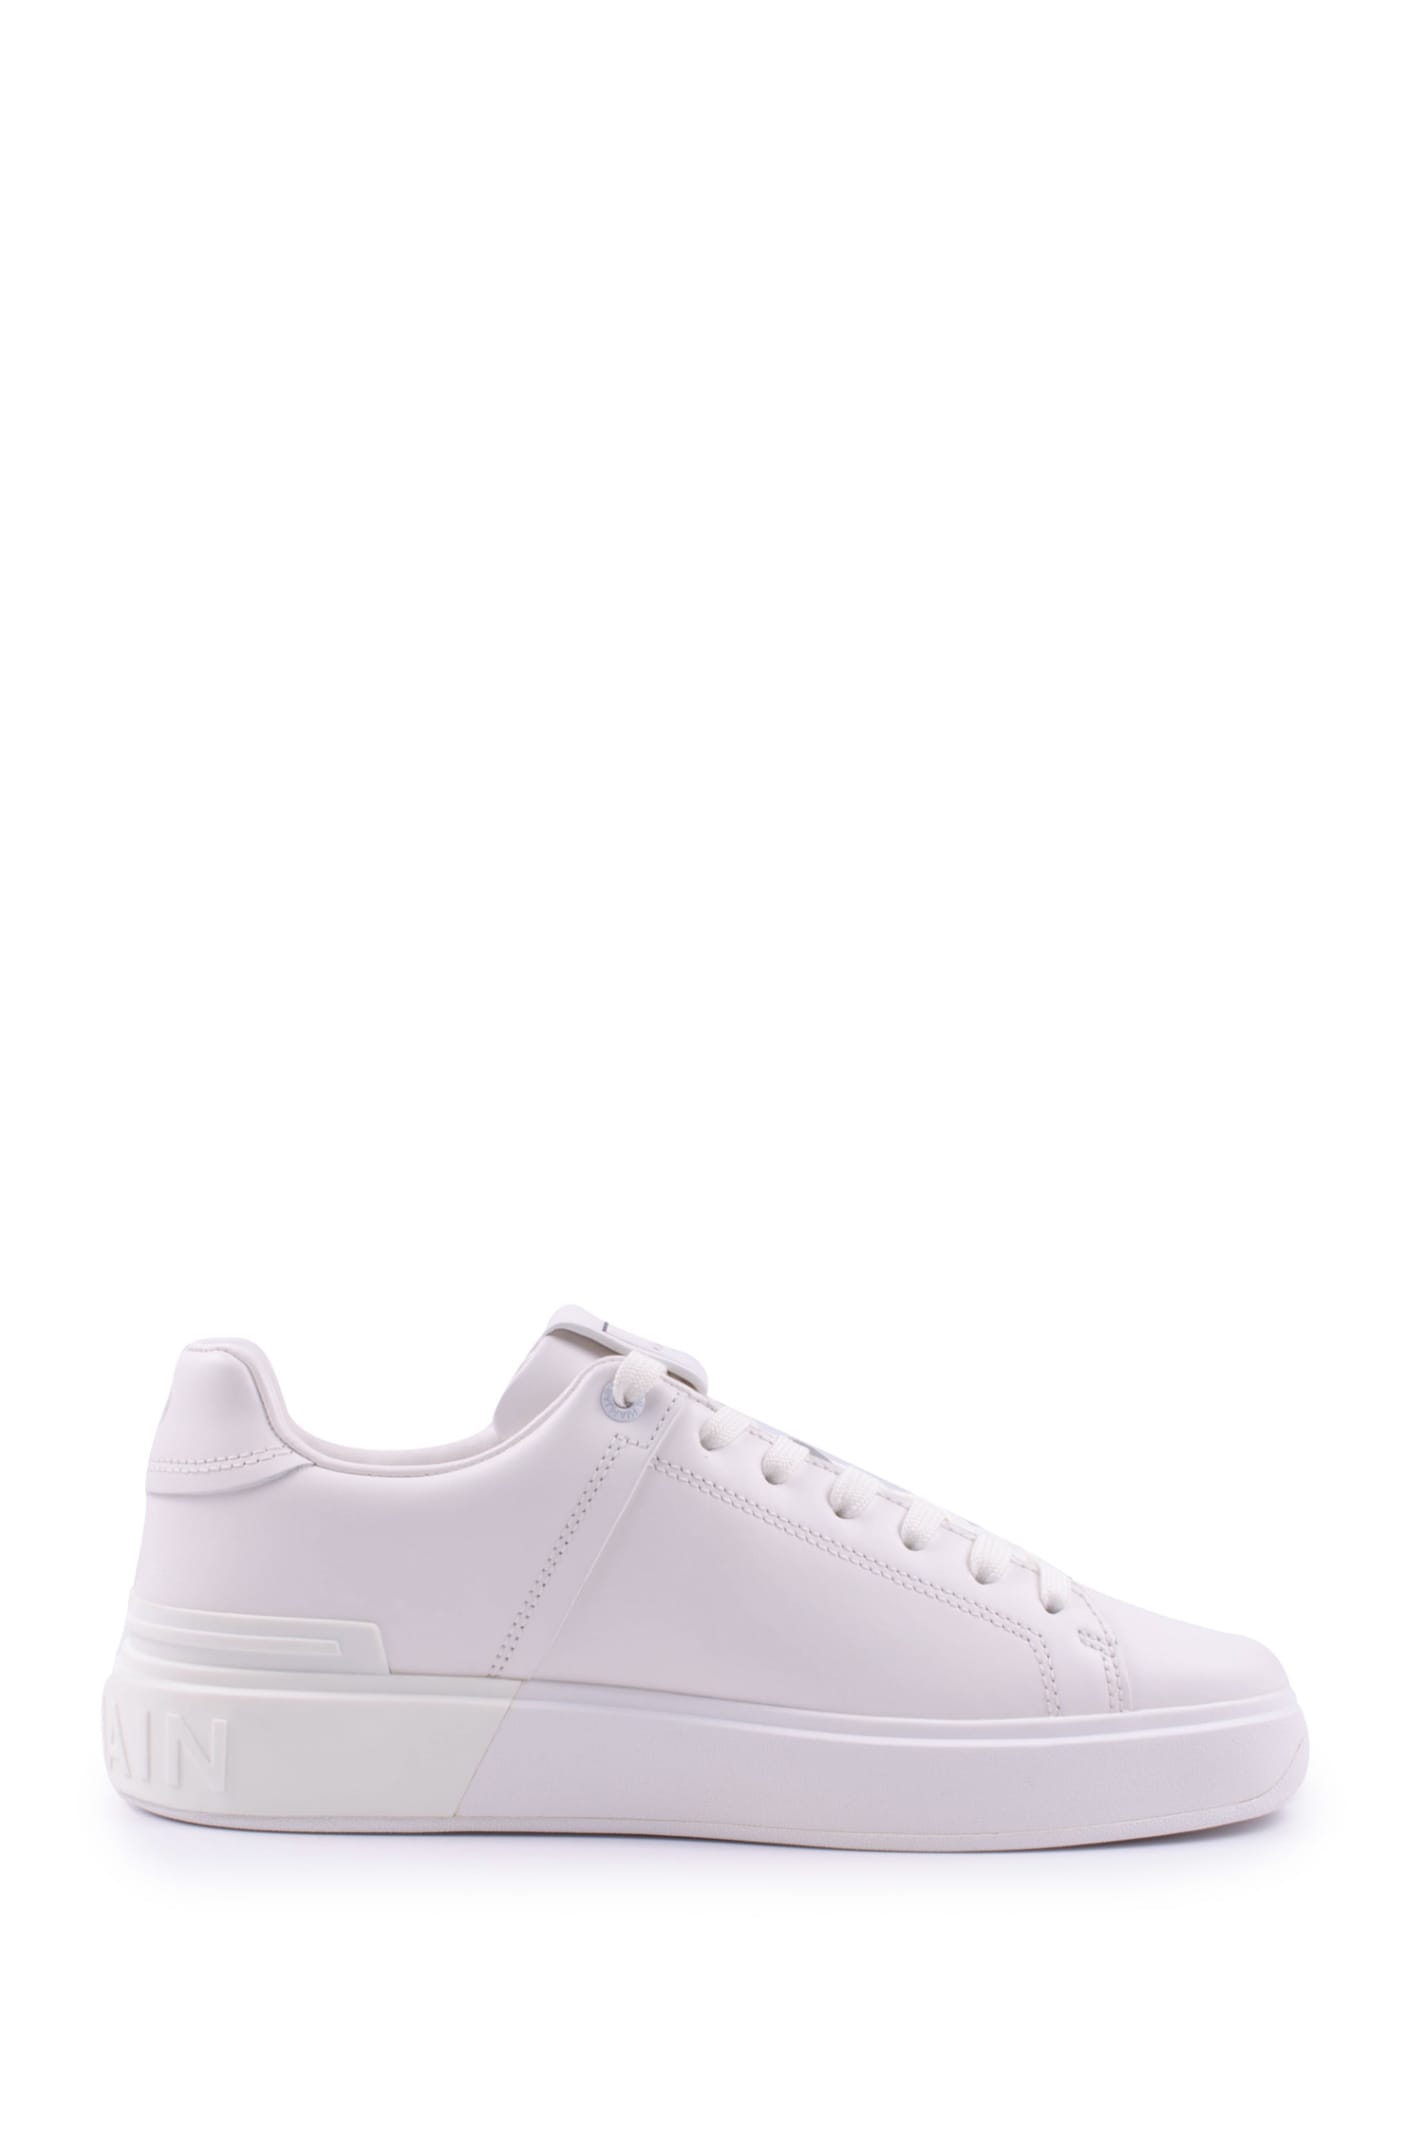 Balmain Smooth White Leather B-court Sneakers